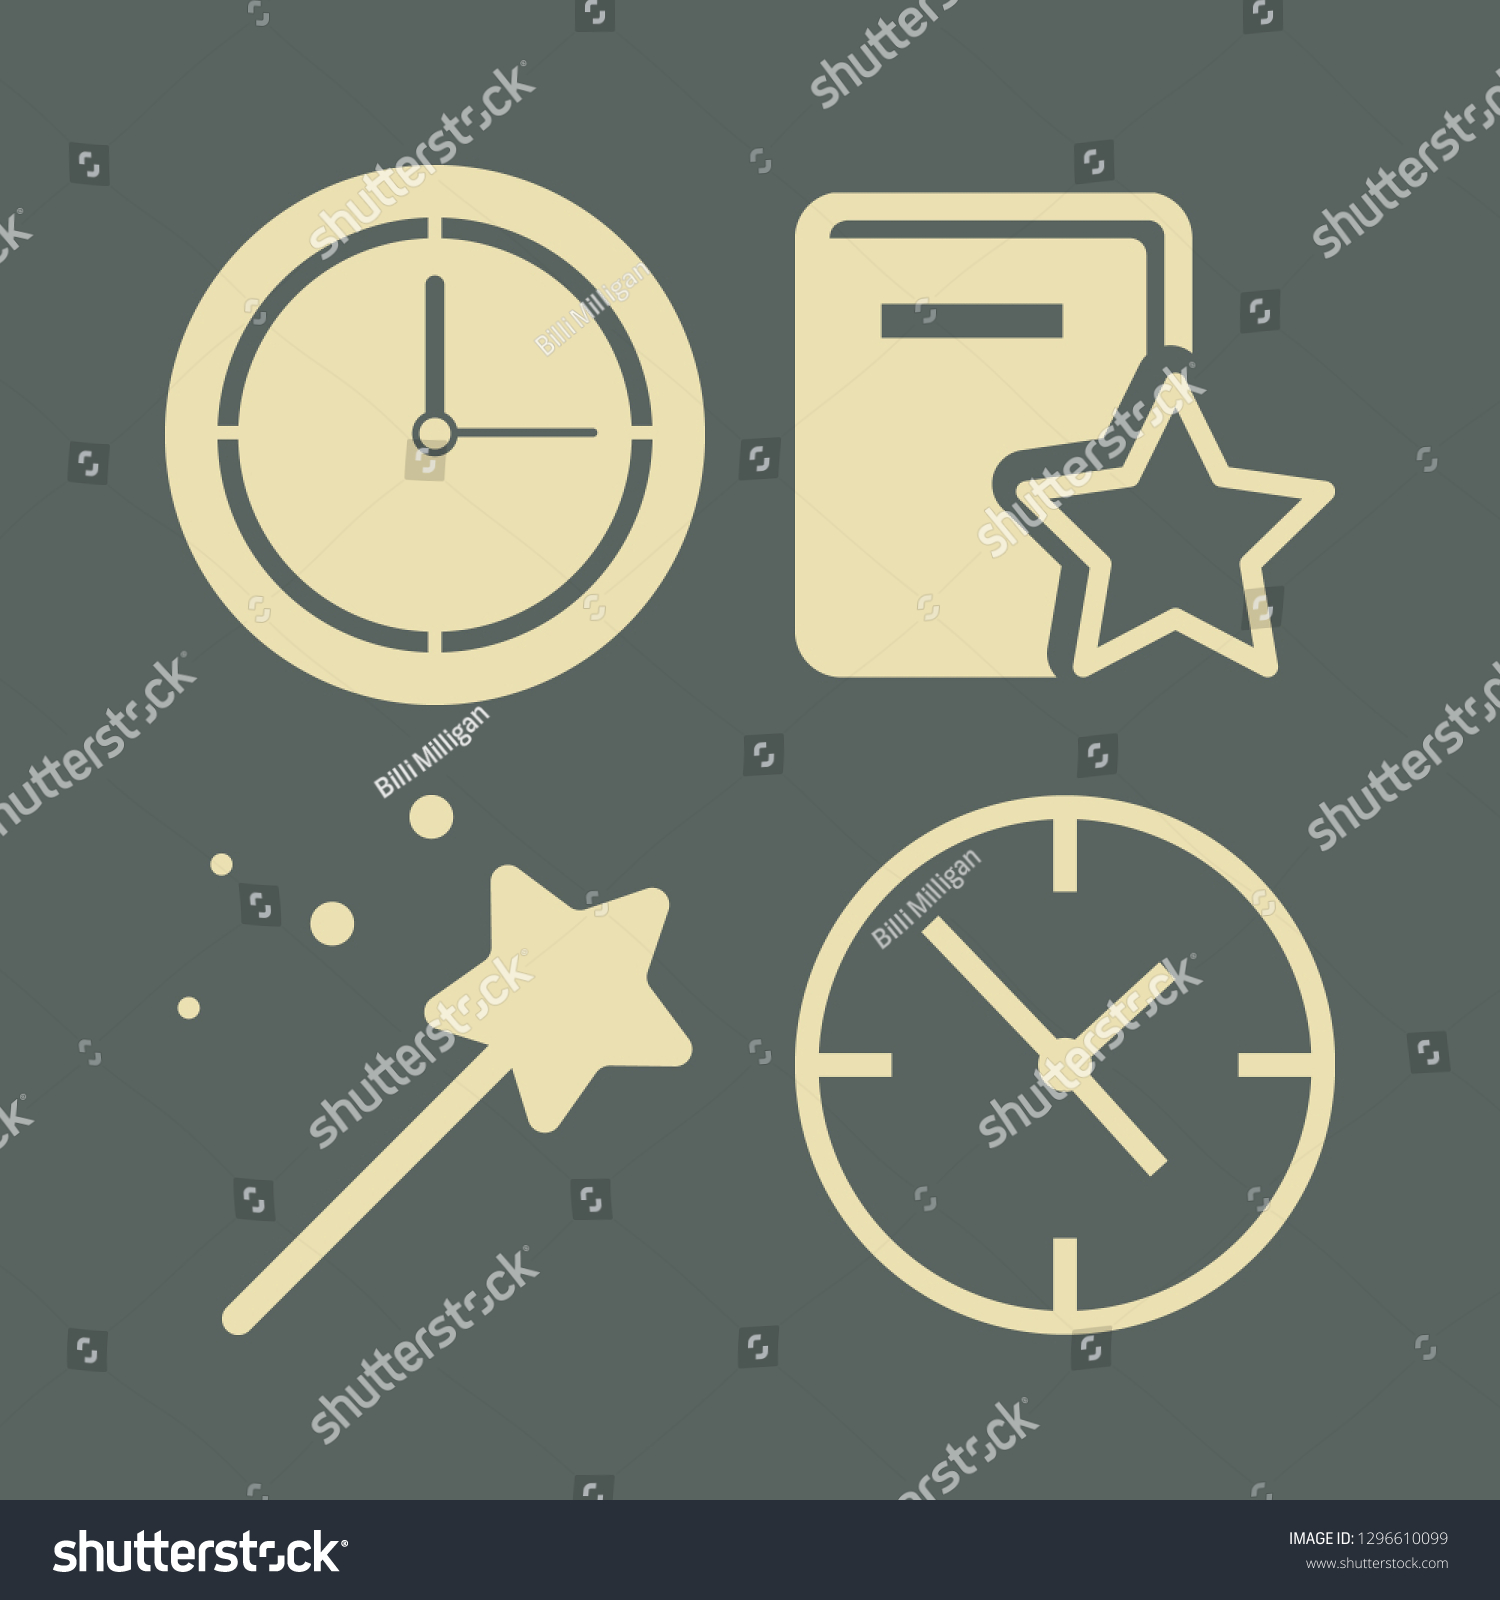 zegen Zinloos hoek Imagination Icon Set Magic Wand Clock Stock Vector (Royalty Free) 1296610099